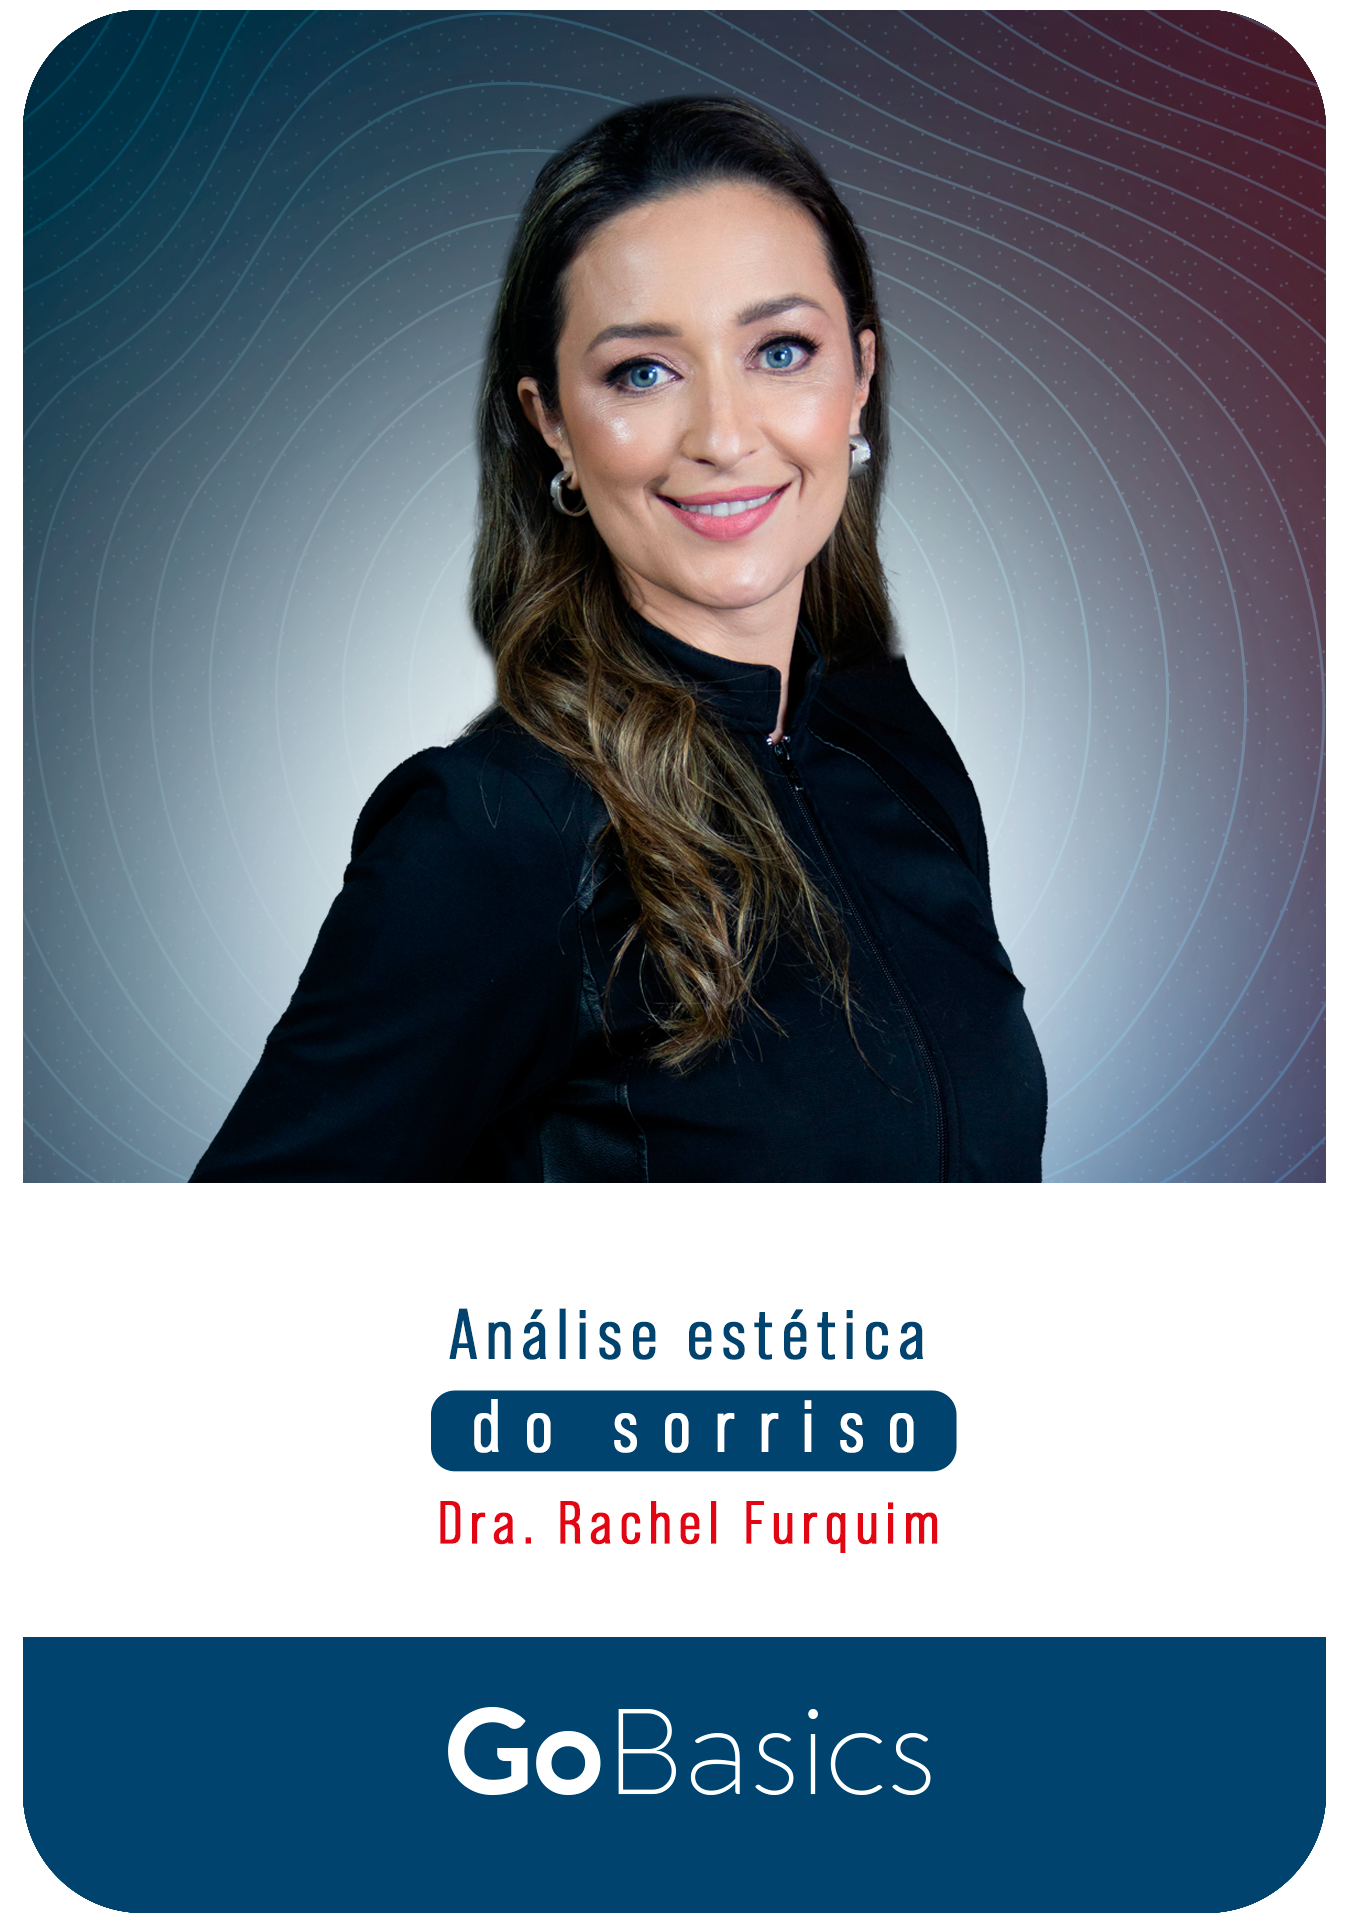 Dra. Rachel Furquim - Análise estética do sorriso